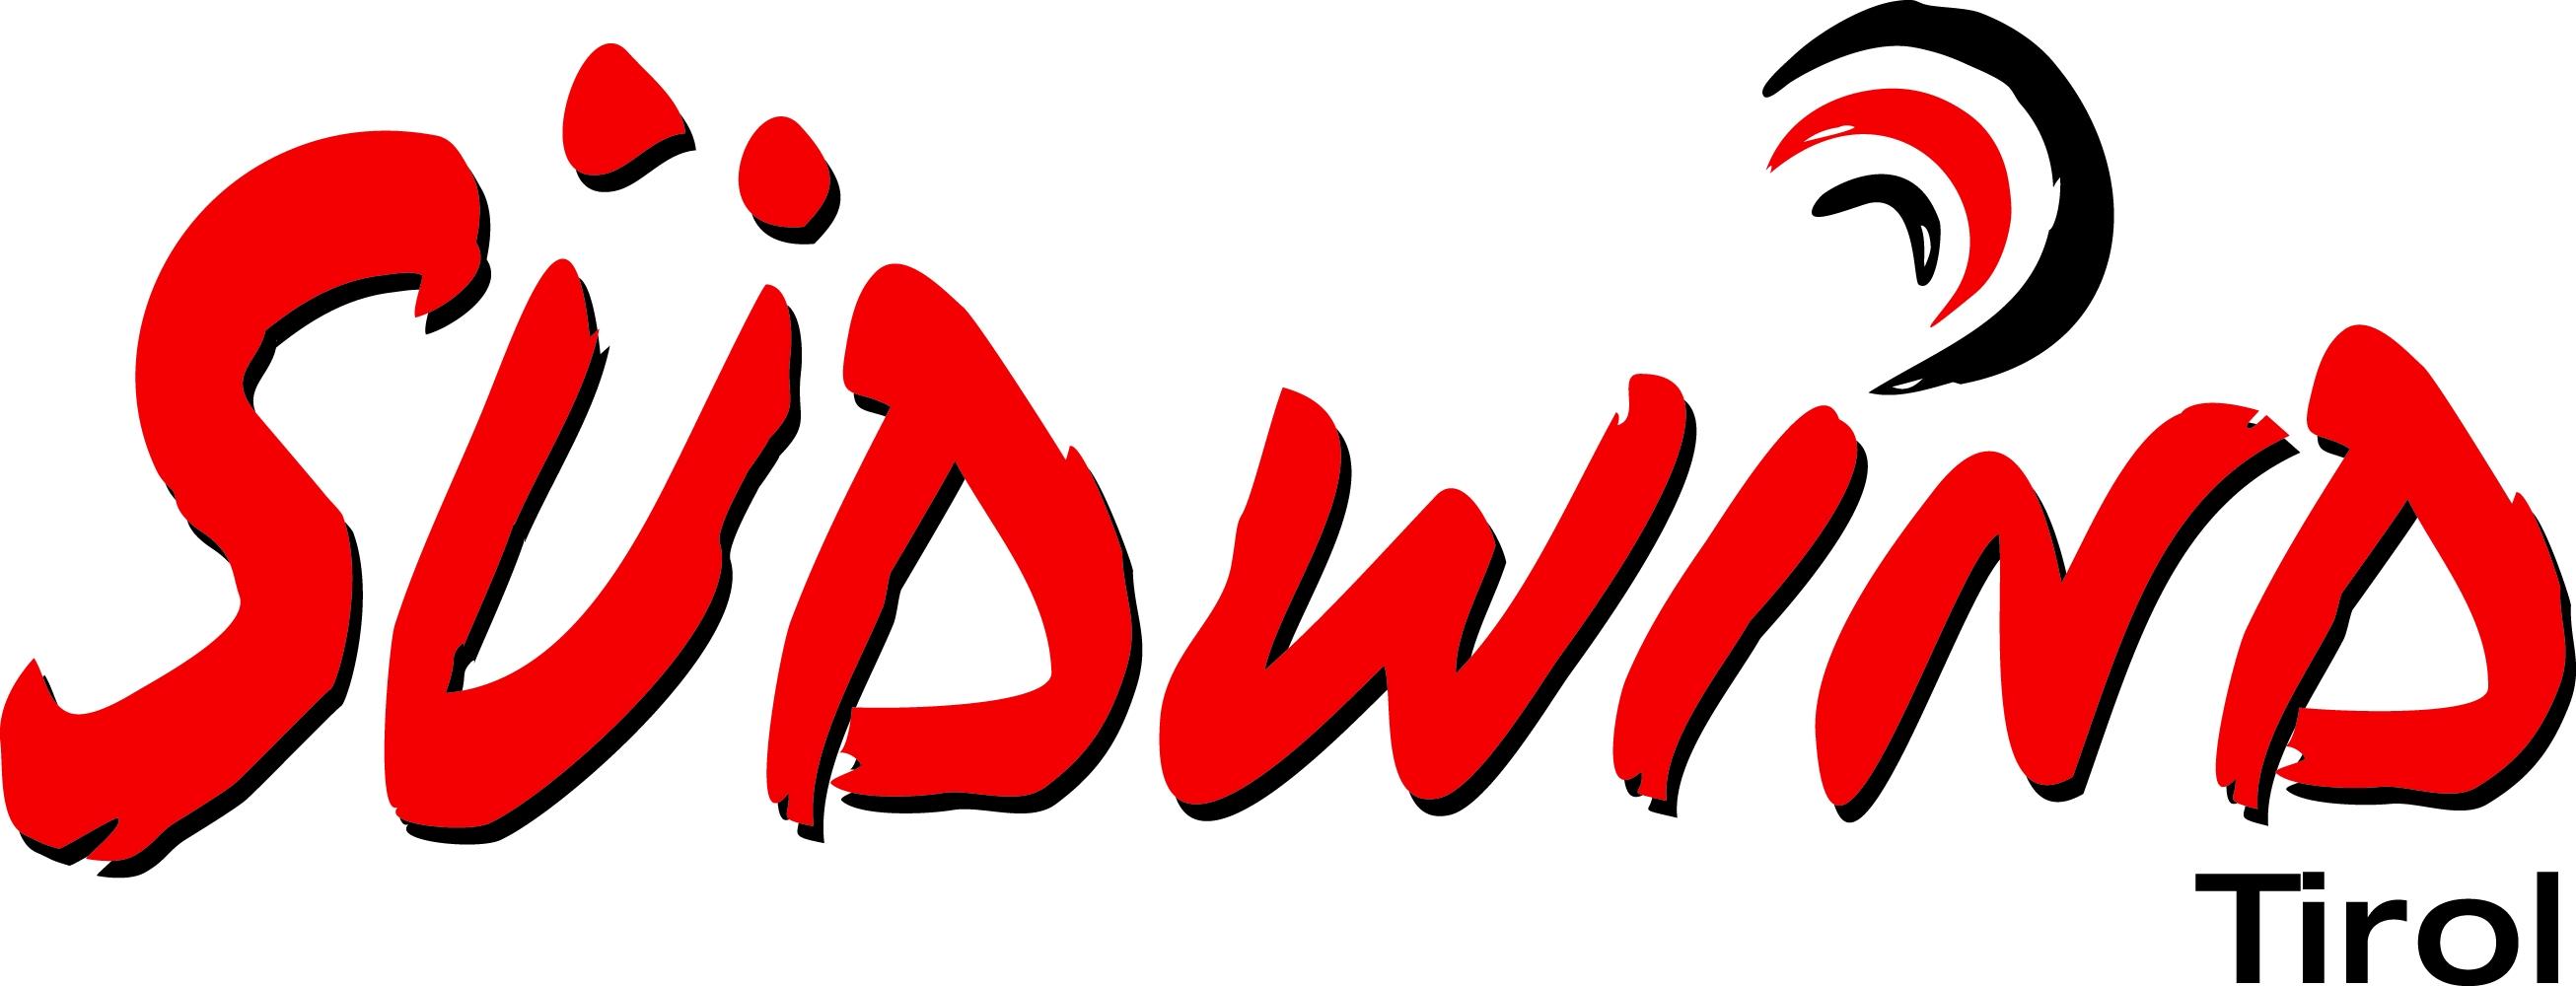 Logo Südwind